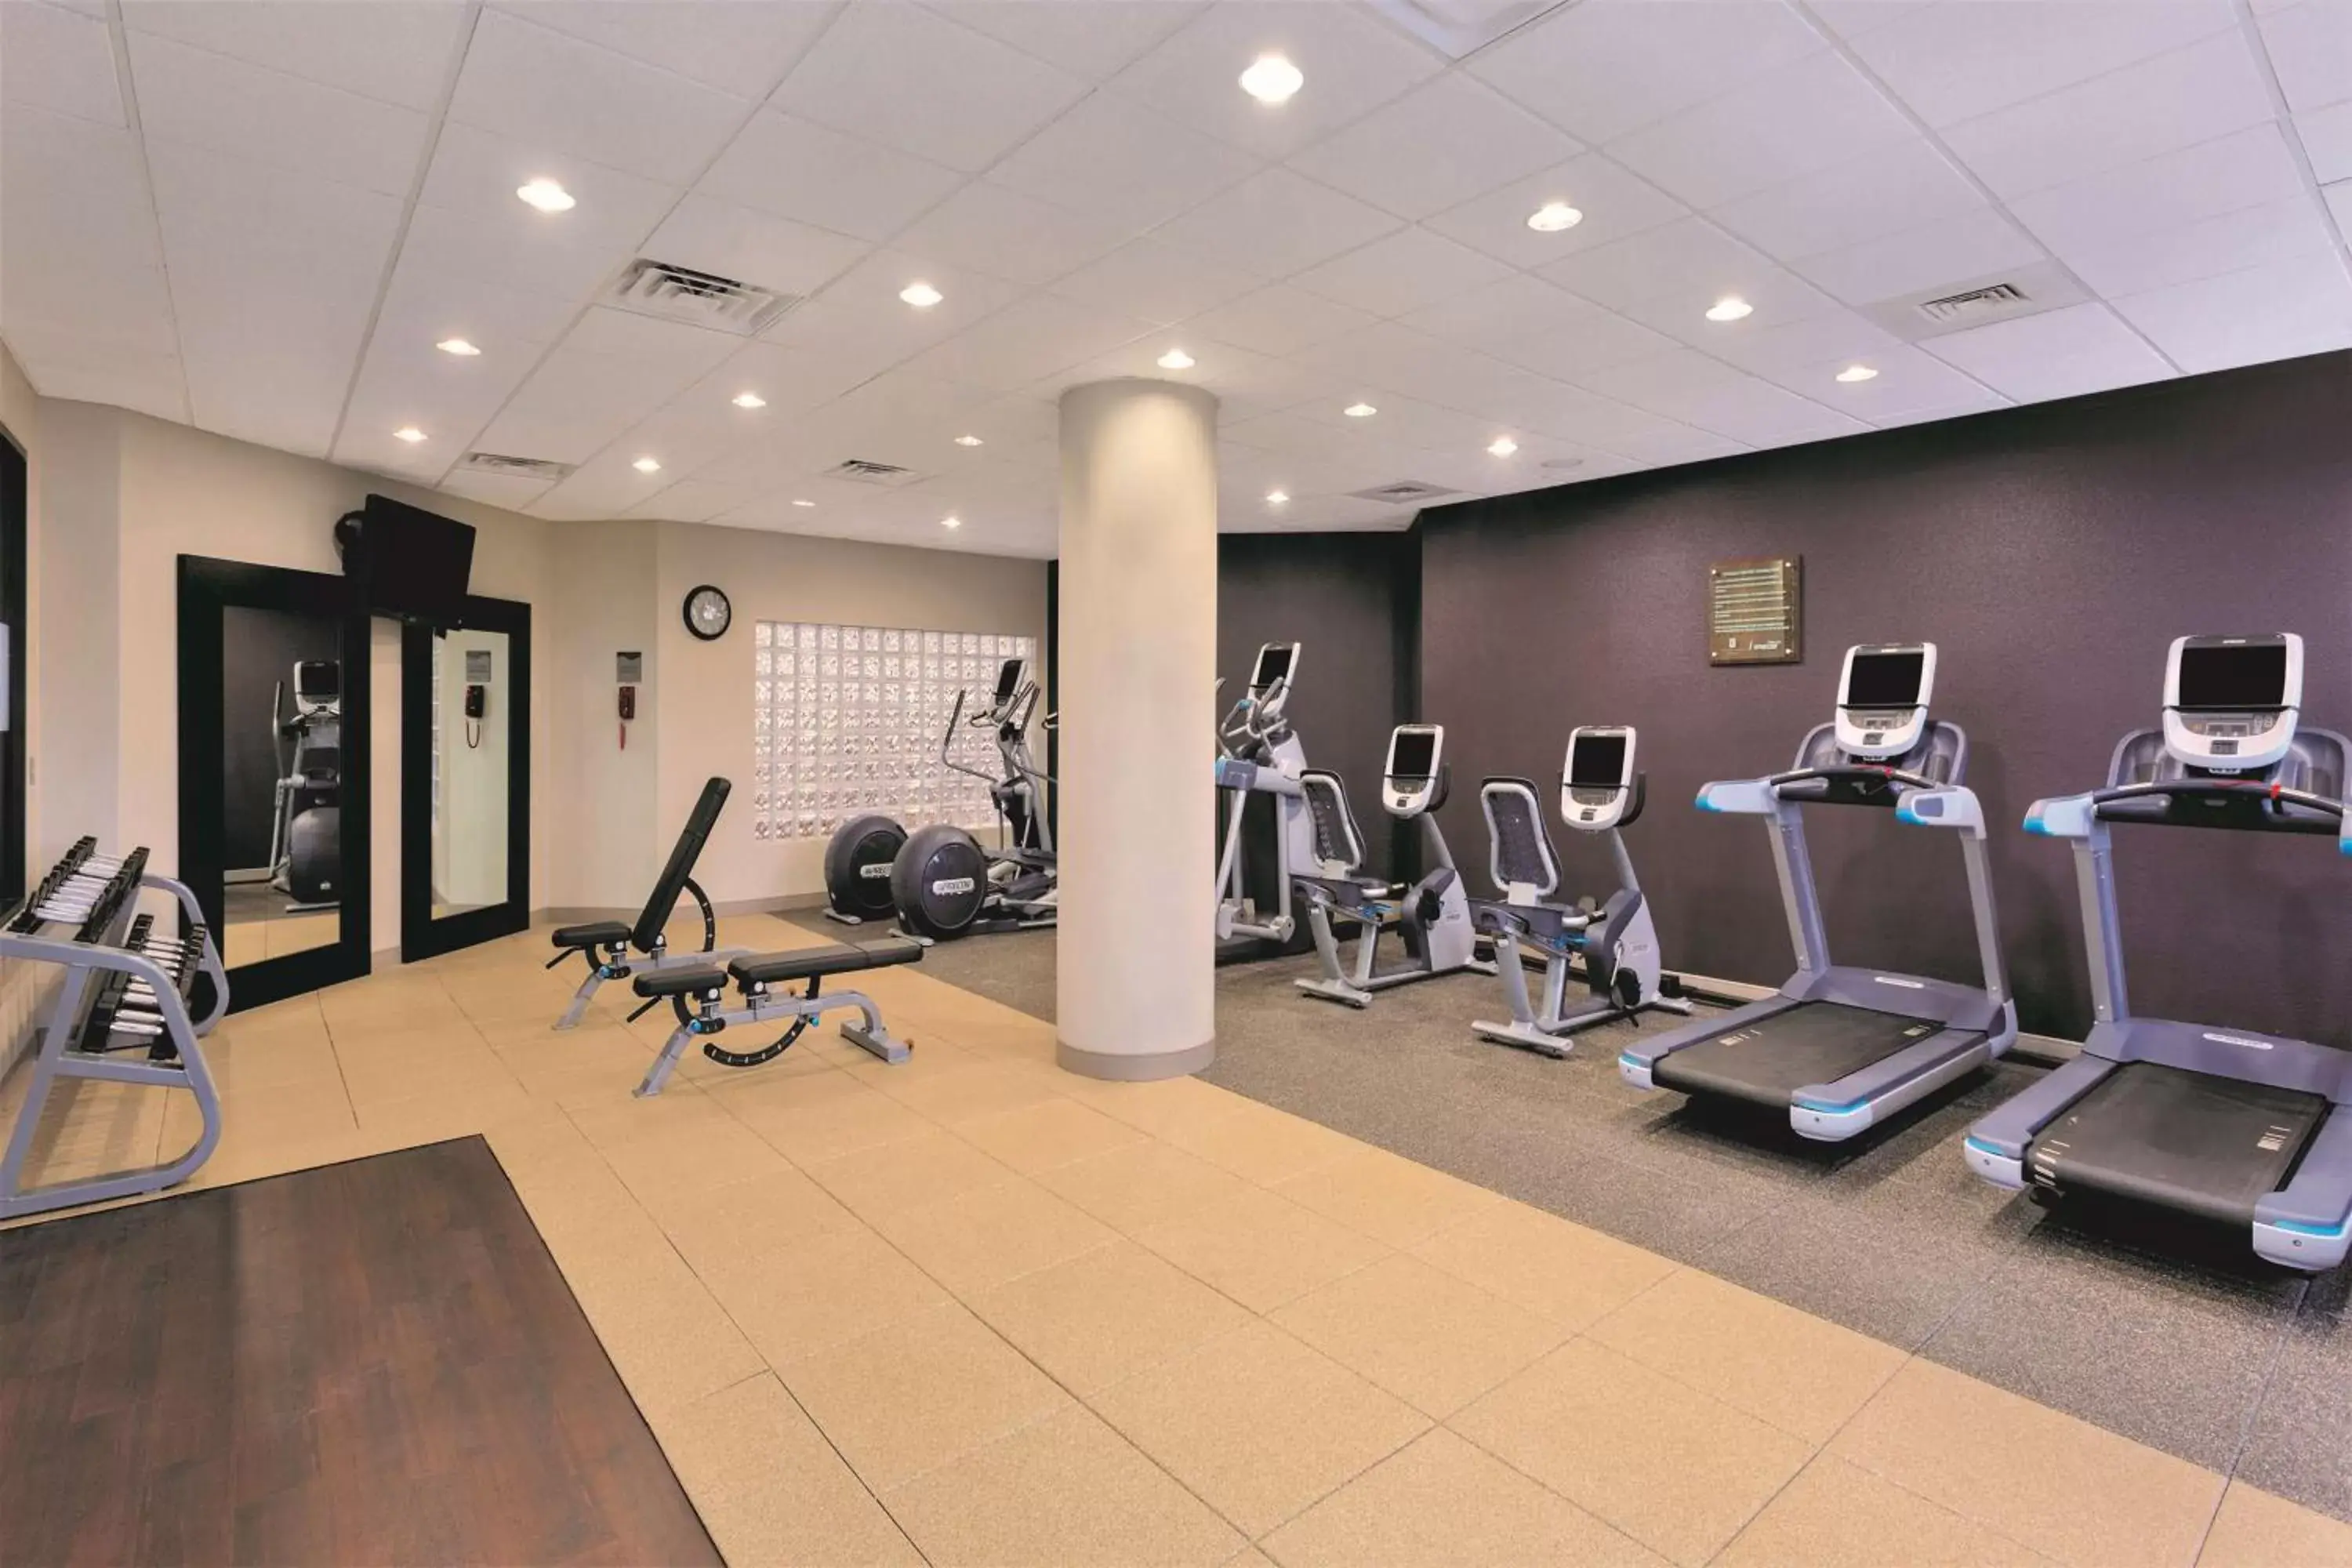 Fitness centre/facilities, Fitness Center/Facilities in Embassy Suites Denver Tech Center